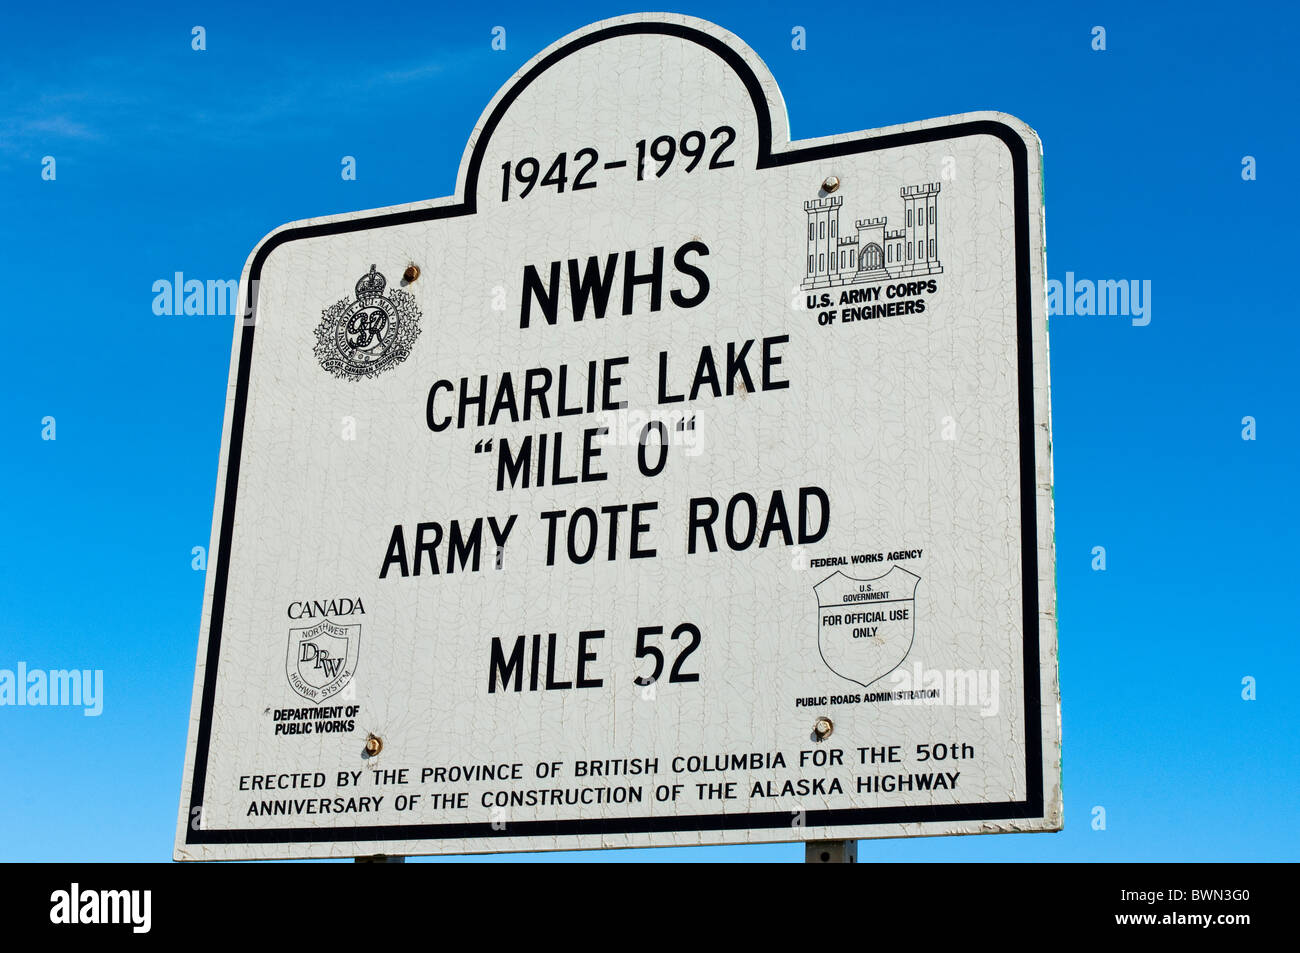 Charlie Lake Mile '0' Army Tote Road at Alaska Highway '52' mile marker, Fort St. John, British Columbia, Canada. Stock Photo